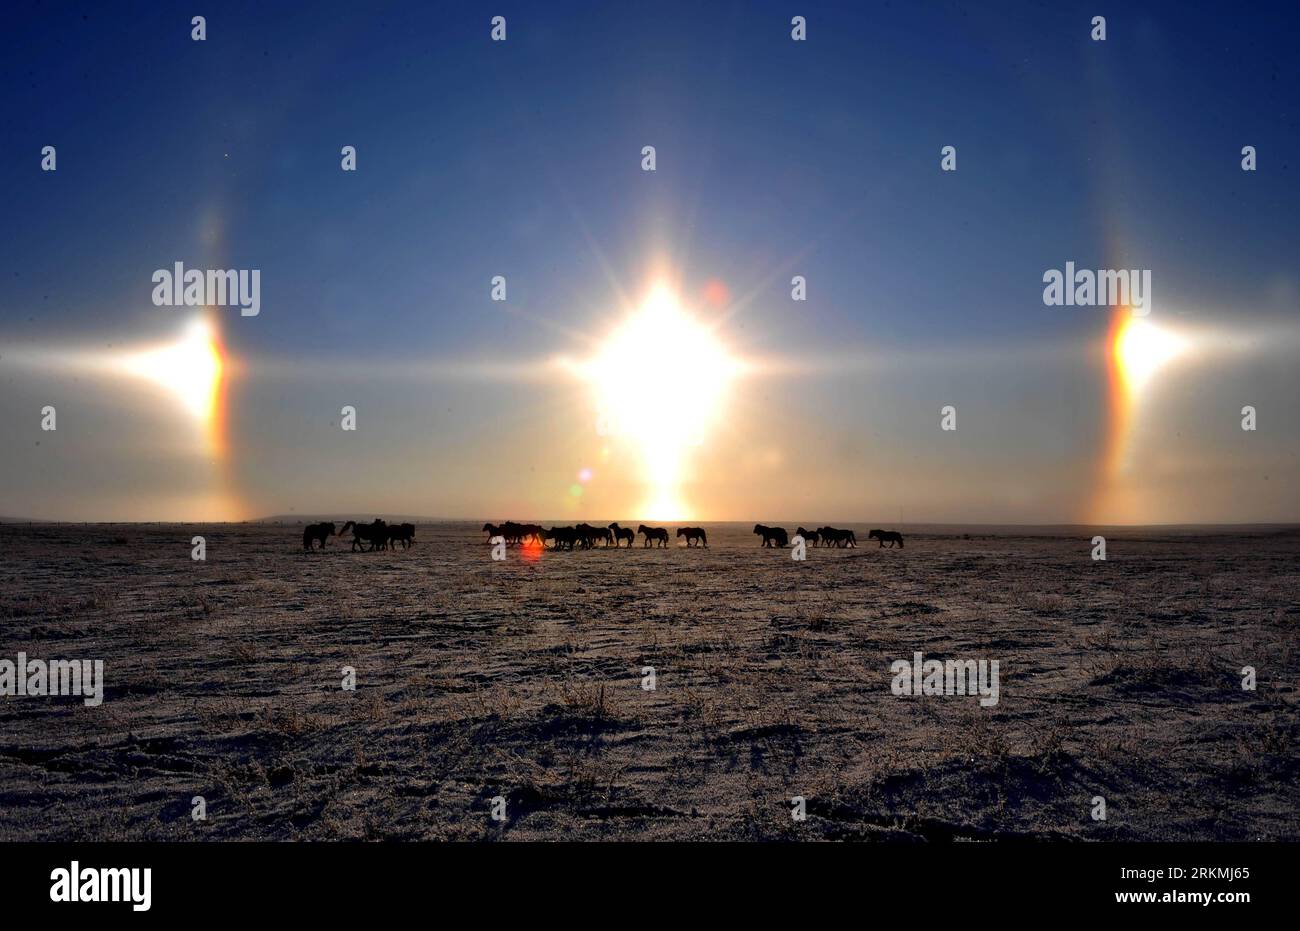 Bildnummer: 56765522  Datum: 20.12.2011  Copyright: imago/Xinhua (111220) -- XILINGOL, Dec. 20, 2011 (Xinhua) -- Photo taken on Dec. 20, 2011 shows parhelion, or sun dog, over a pasture in the Xilingol League, north China s Inner Mongolia Autonomous Region. Parhelion is often formed due to sunlight deflection from icy crystals in the air. (Xinhua/Ren Junchuan) (lmm) CHINA-INNER MONGOLIA-PARHELION (CN) PUBLICATIONxNOTxINxCHN Reise Natur Nebensonnen Parhelia Sonne Gegenlicht Highlight xda x0x Naturphänomen 2011 quer Highlight premiumd kurios Komik      56765522 Date 20 12 2011 Copyright Imago XI Stock Photo